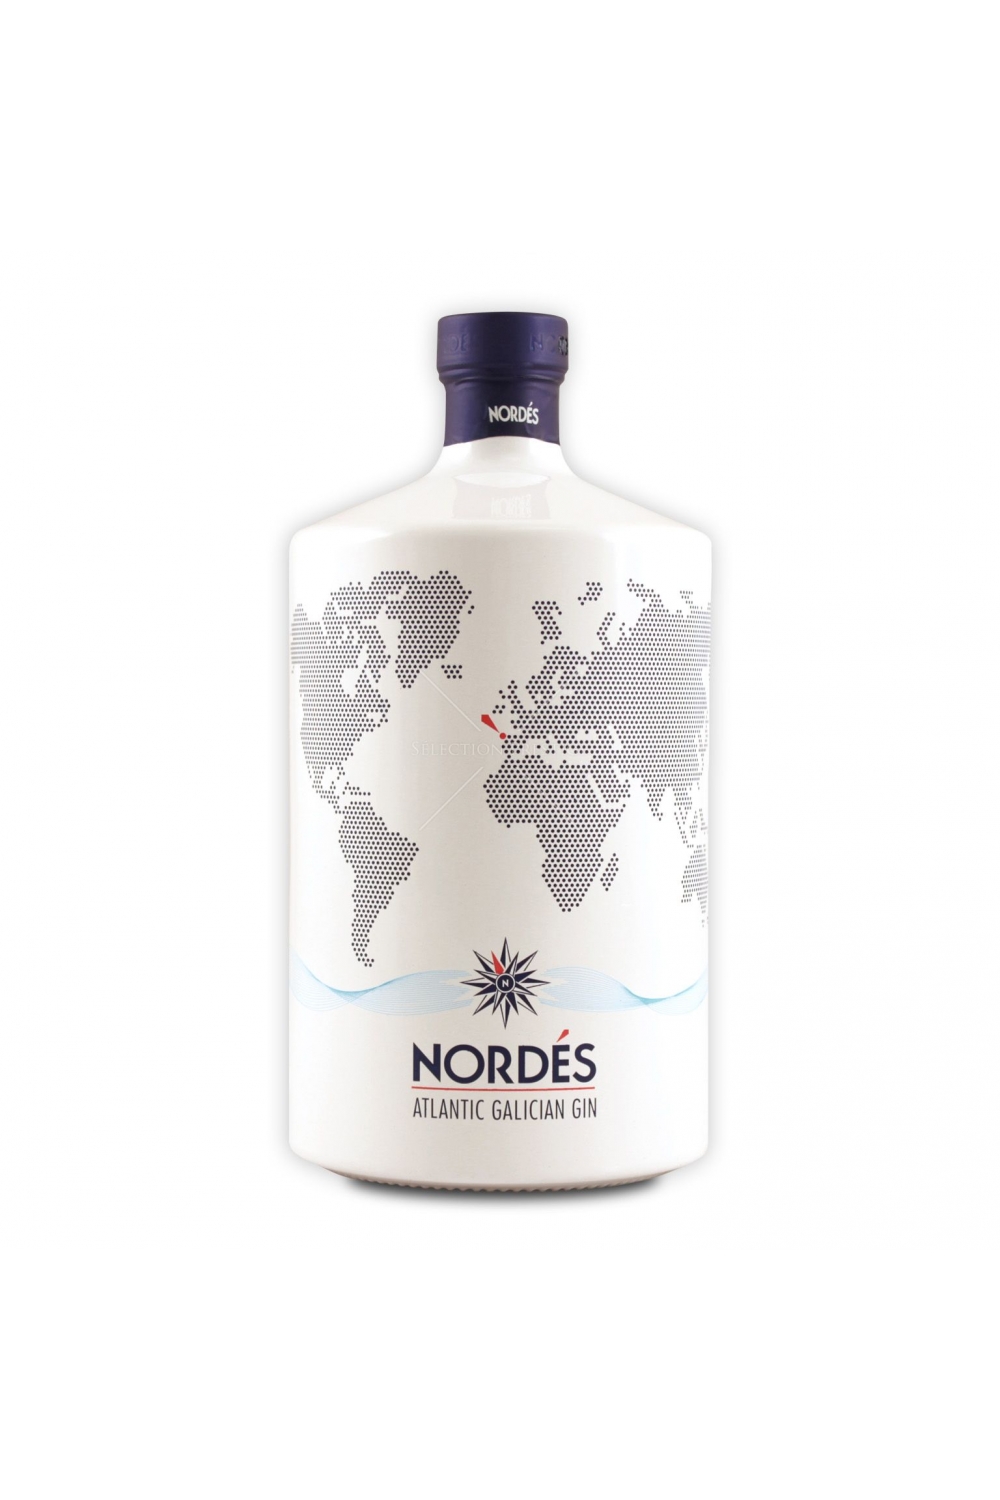 https://karadarshop.com/27092-large_default/nordes-atlantic-galician-gin.jpg